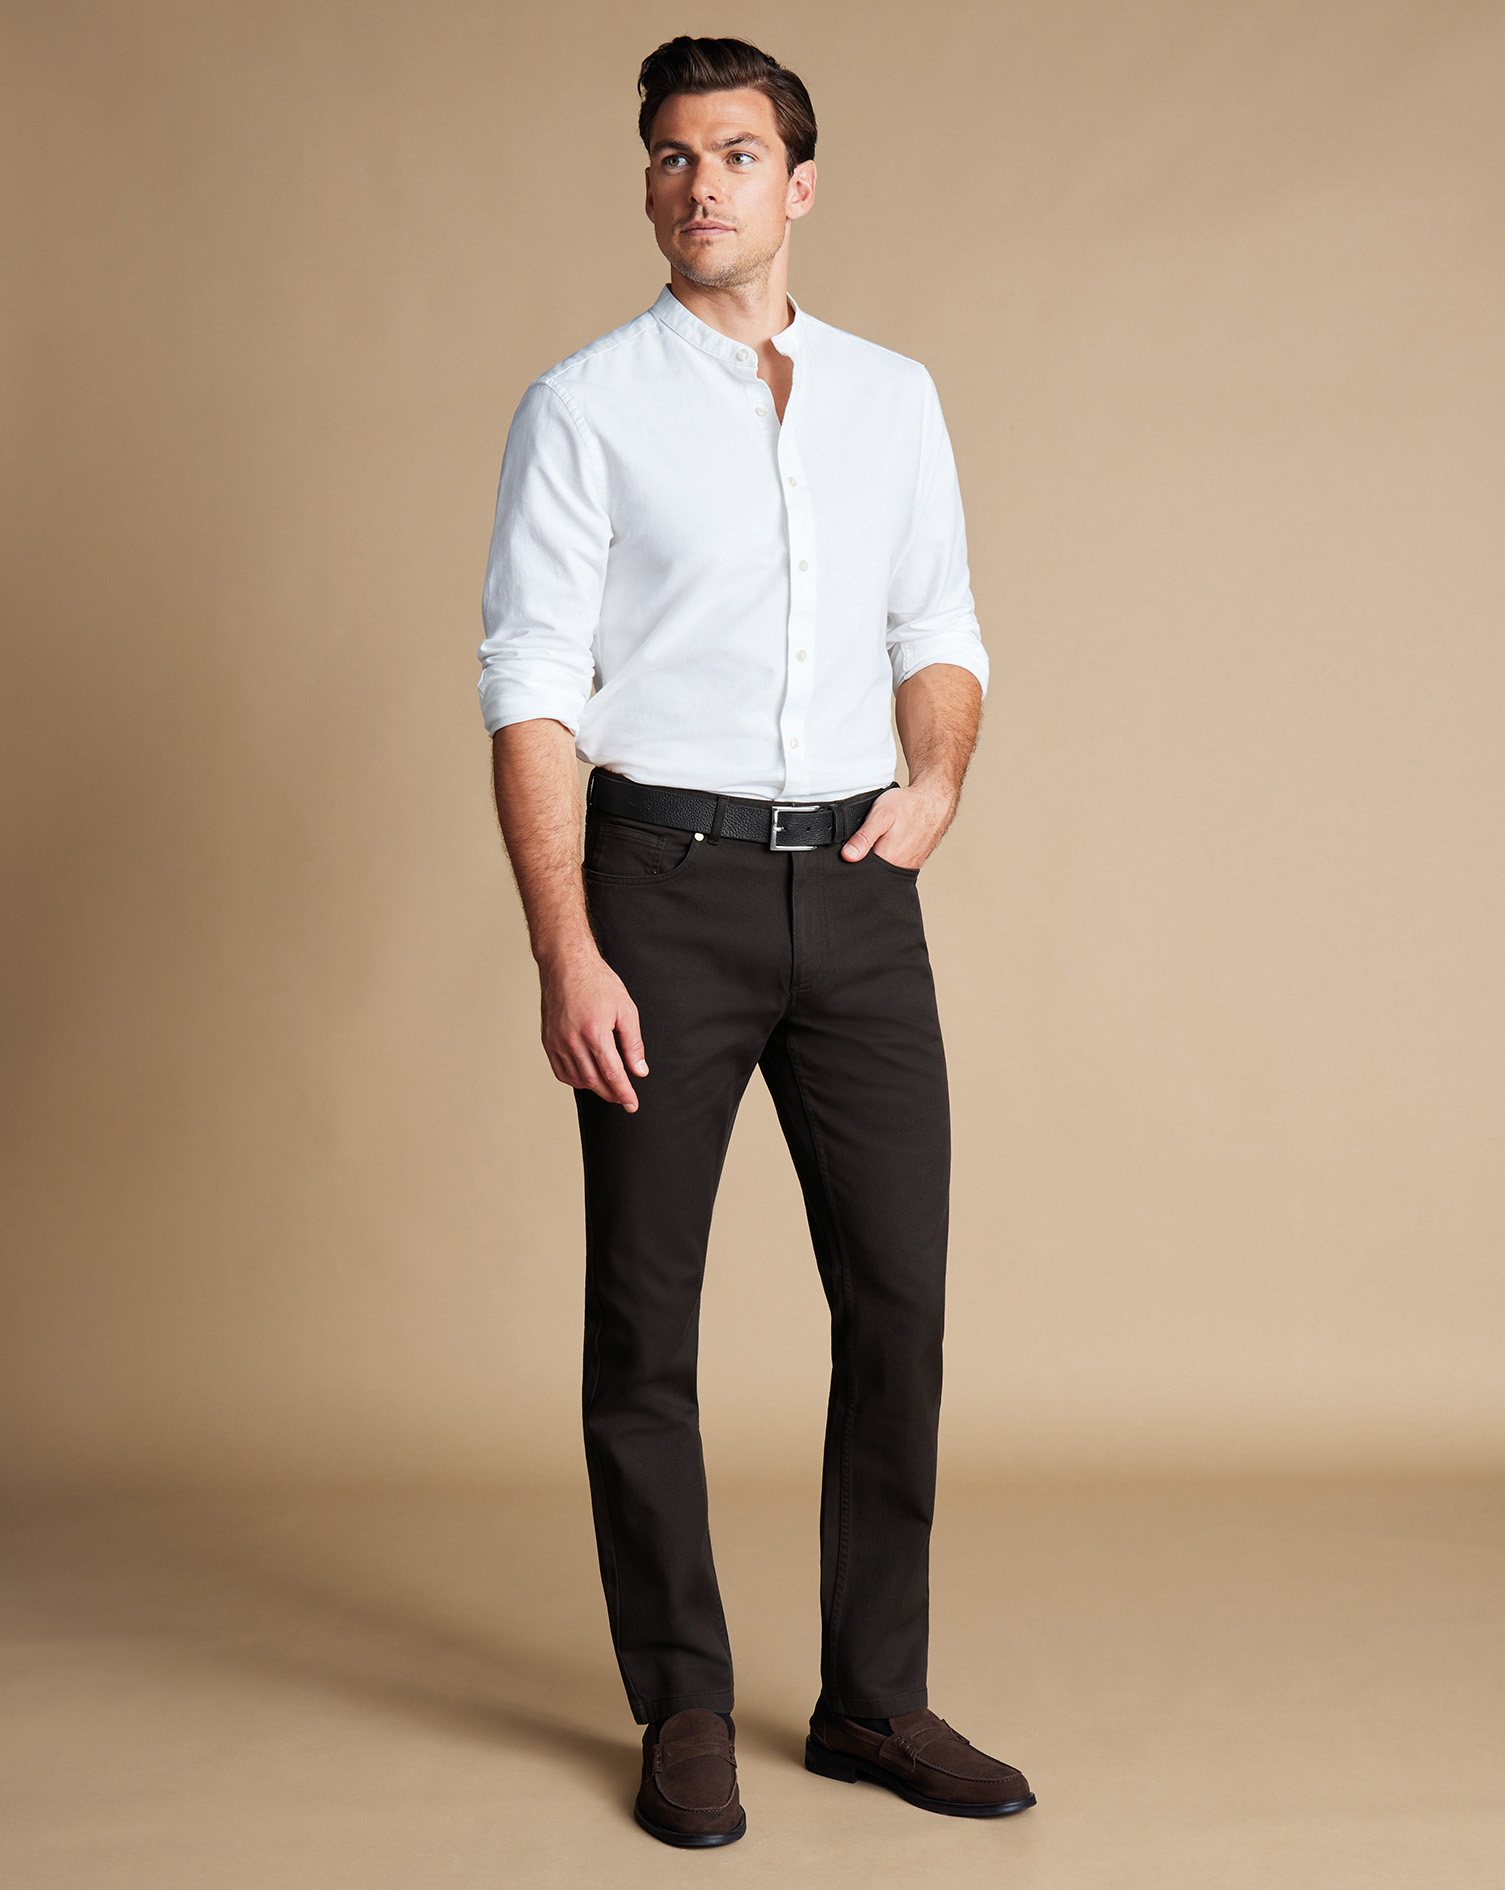 Men's Charles Tyrwhitt Twill 5 Pocket Jeans - Black Size W30 L30 Cotton
